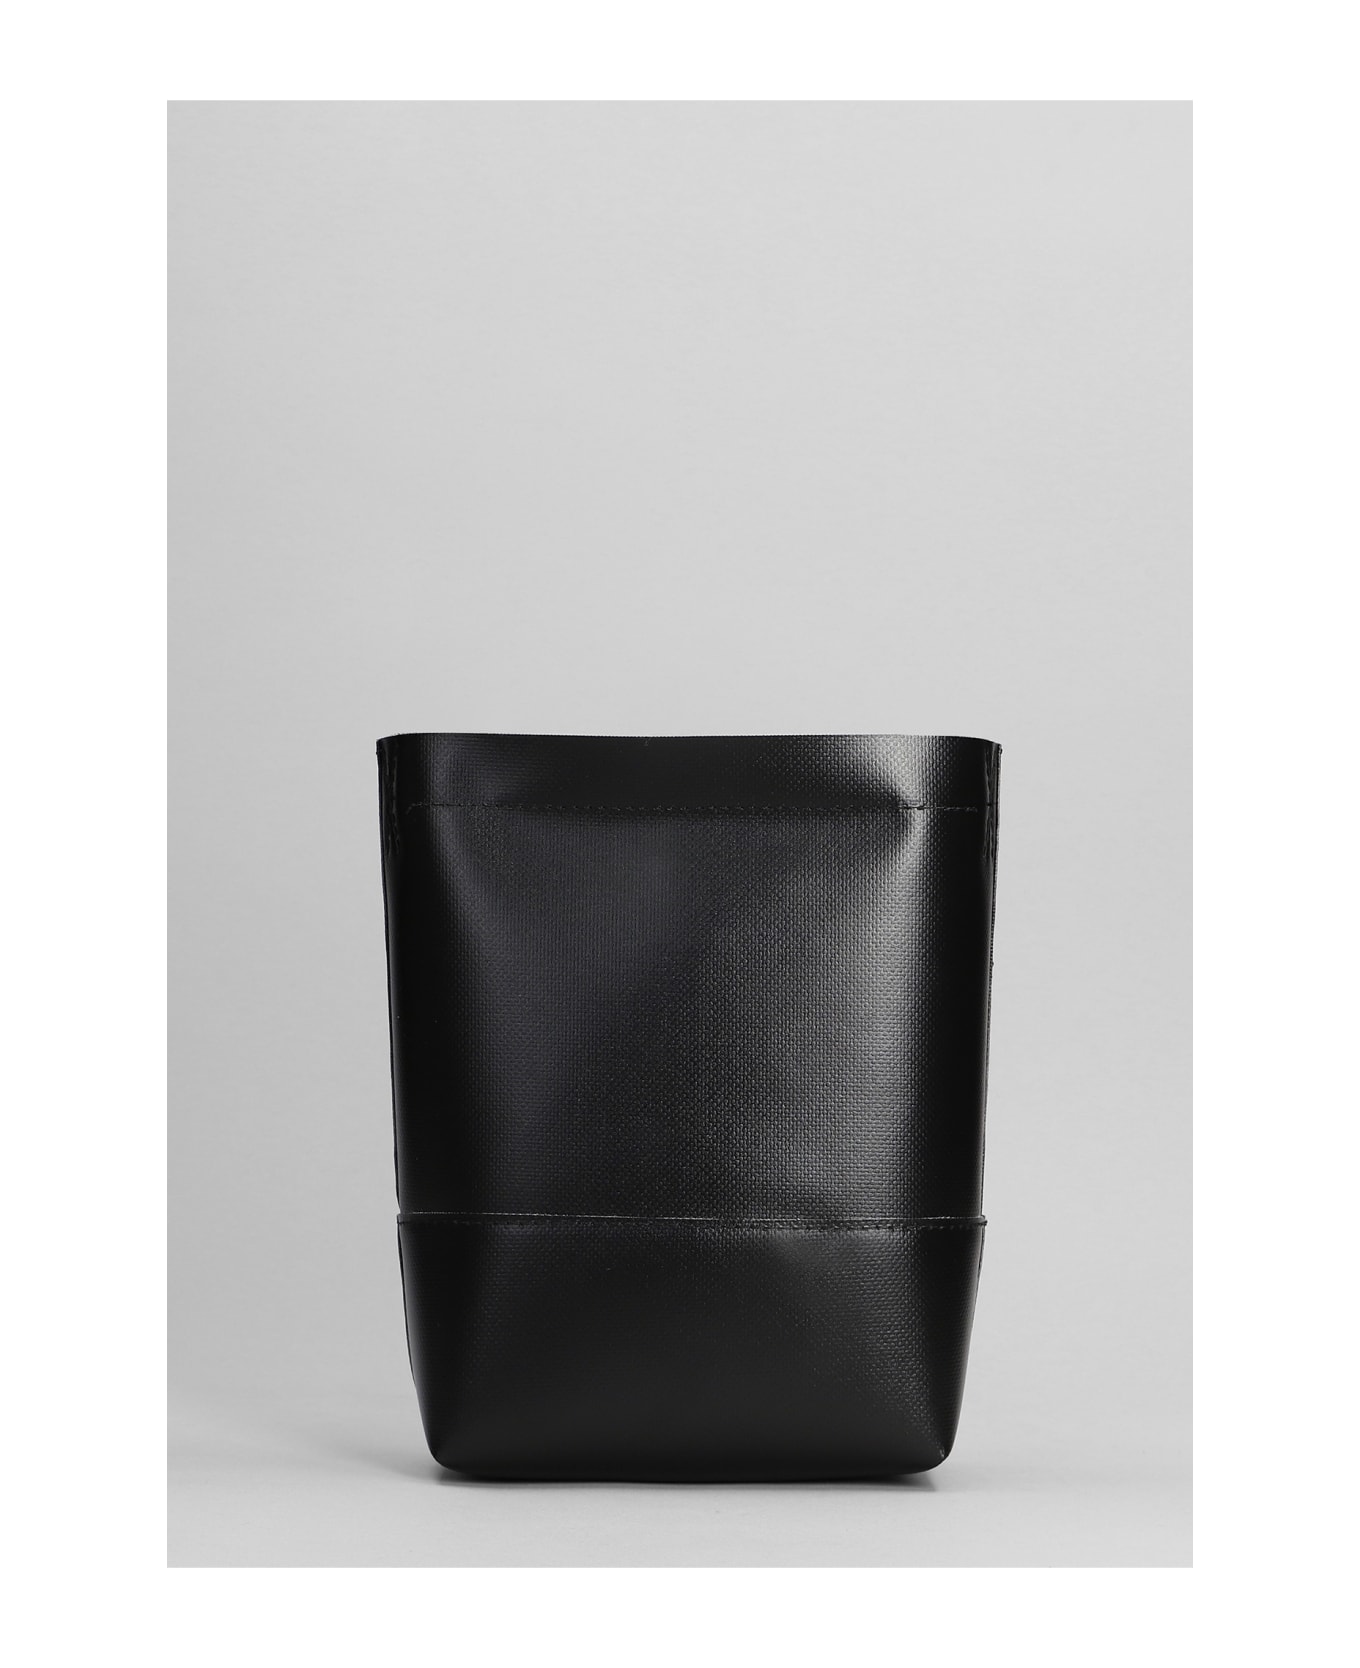 Marni Shoulder Bag In Black Polyuretan - black